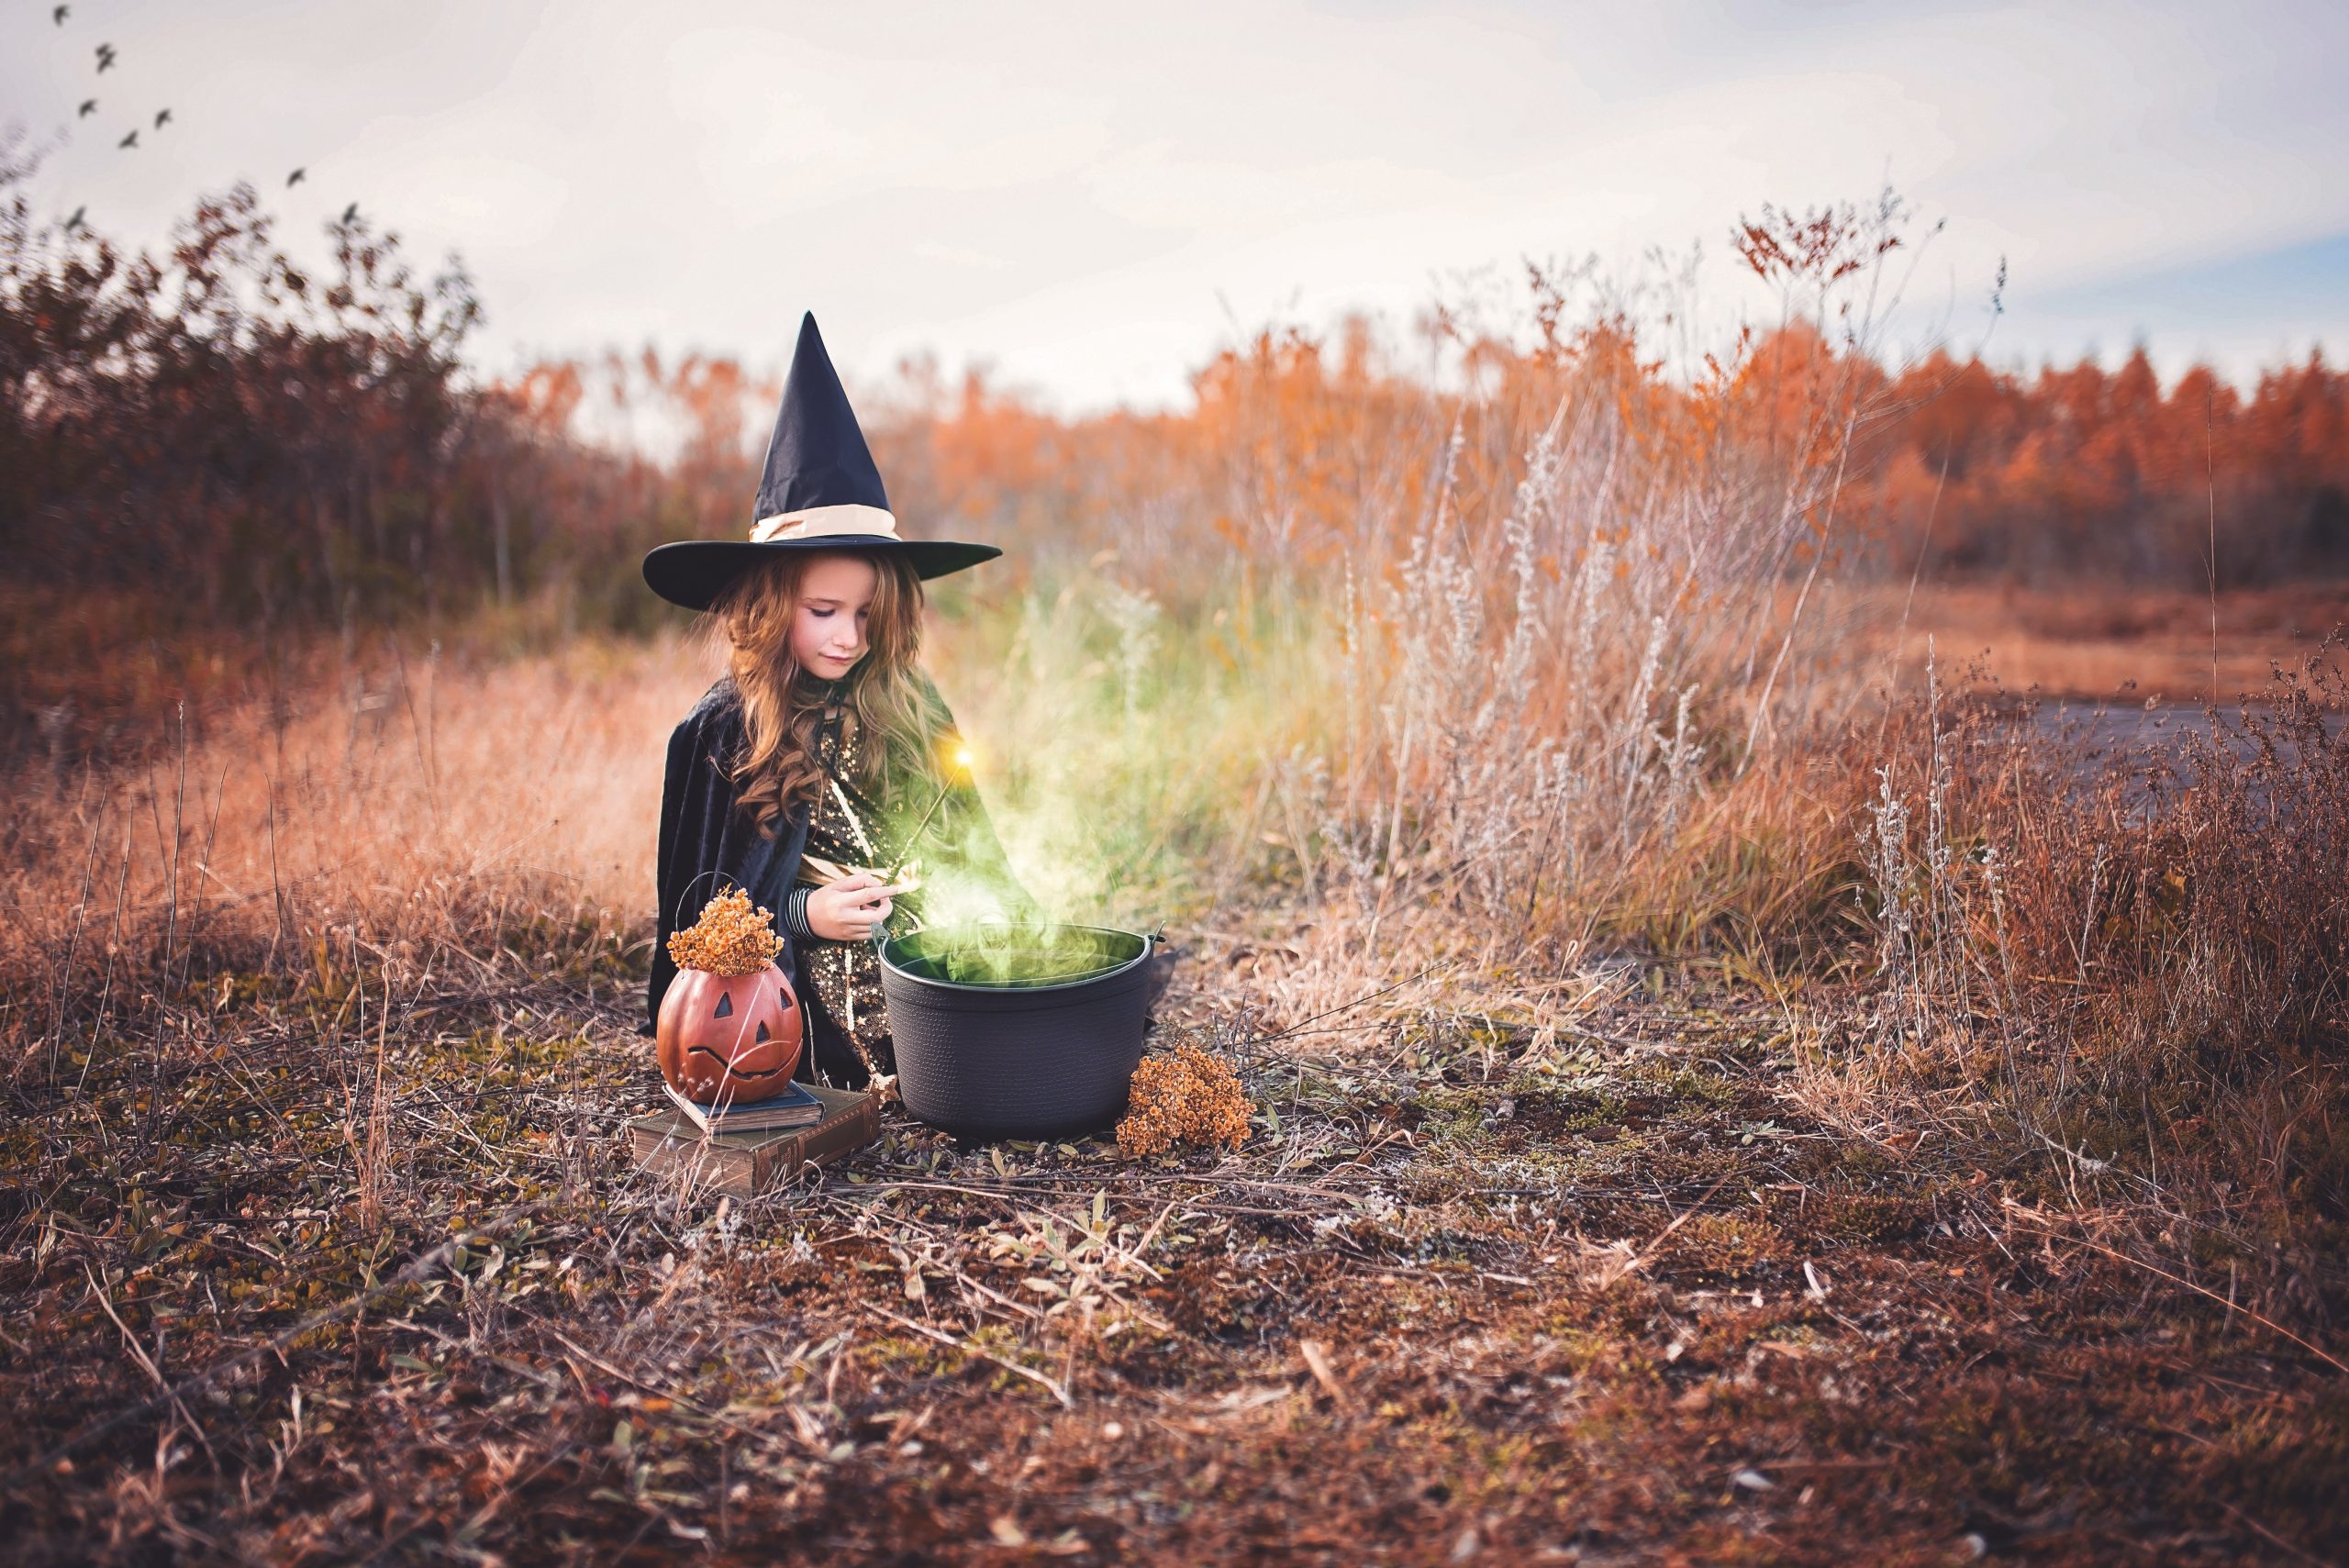 viralnewsmagazine's Halloween tasks for Kids from Sweet to Spooky